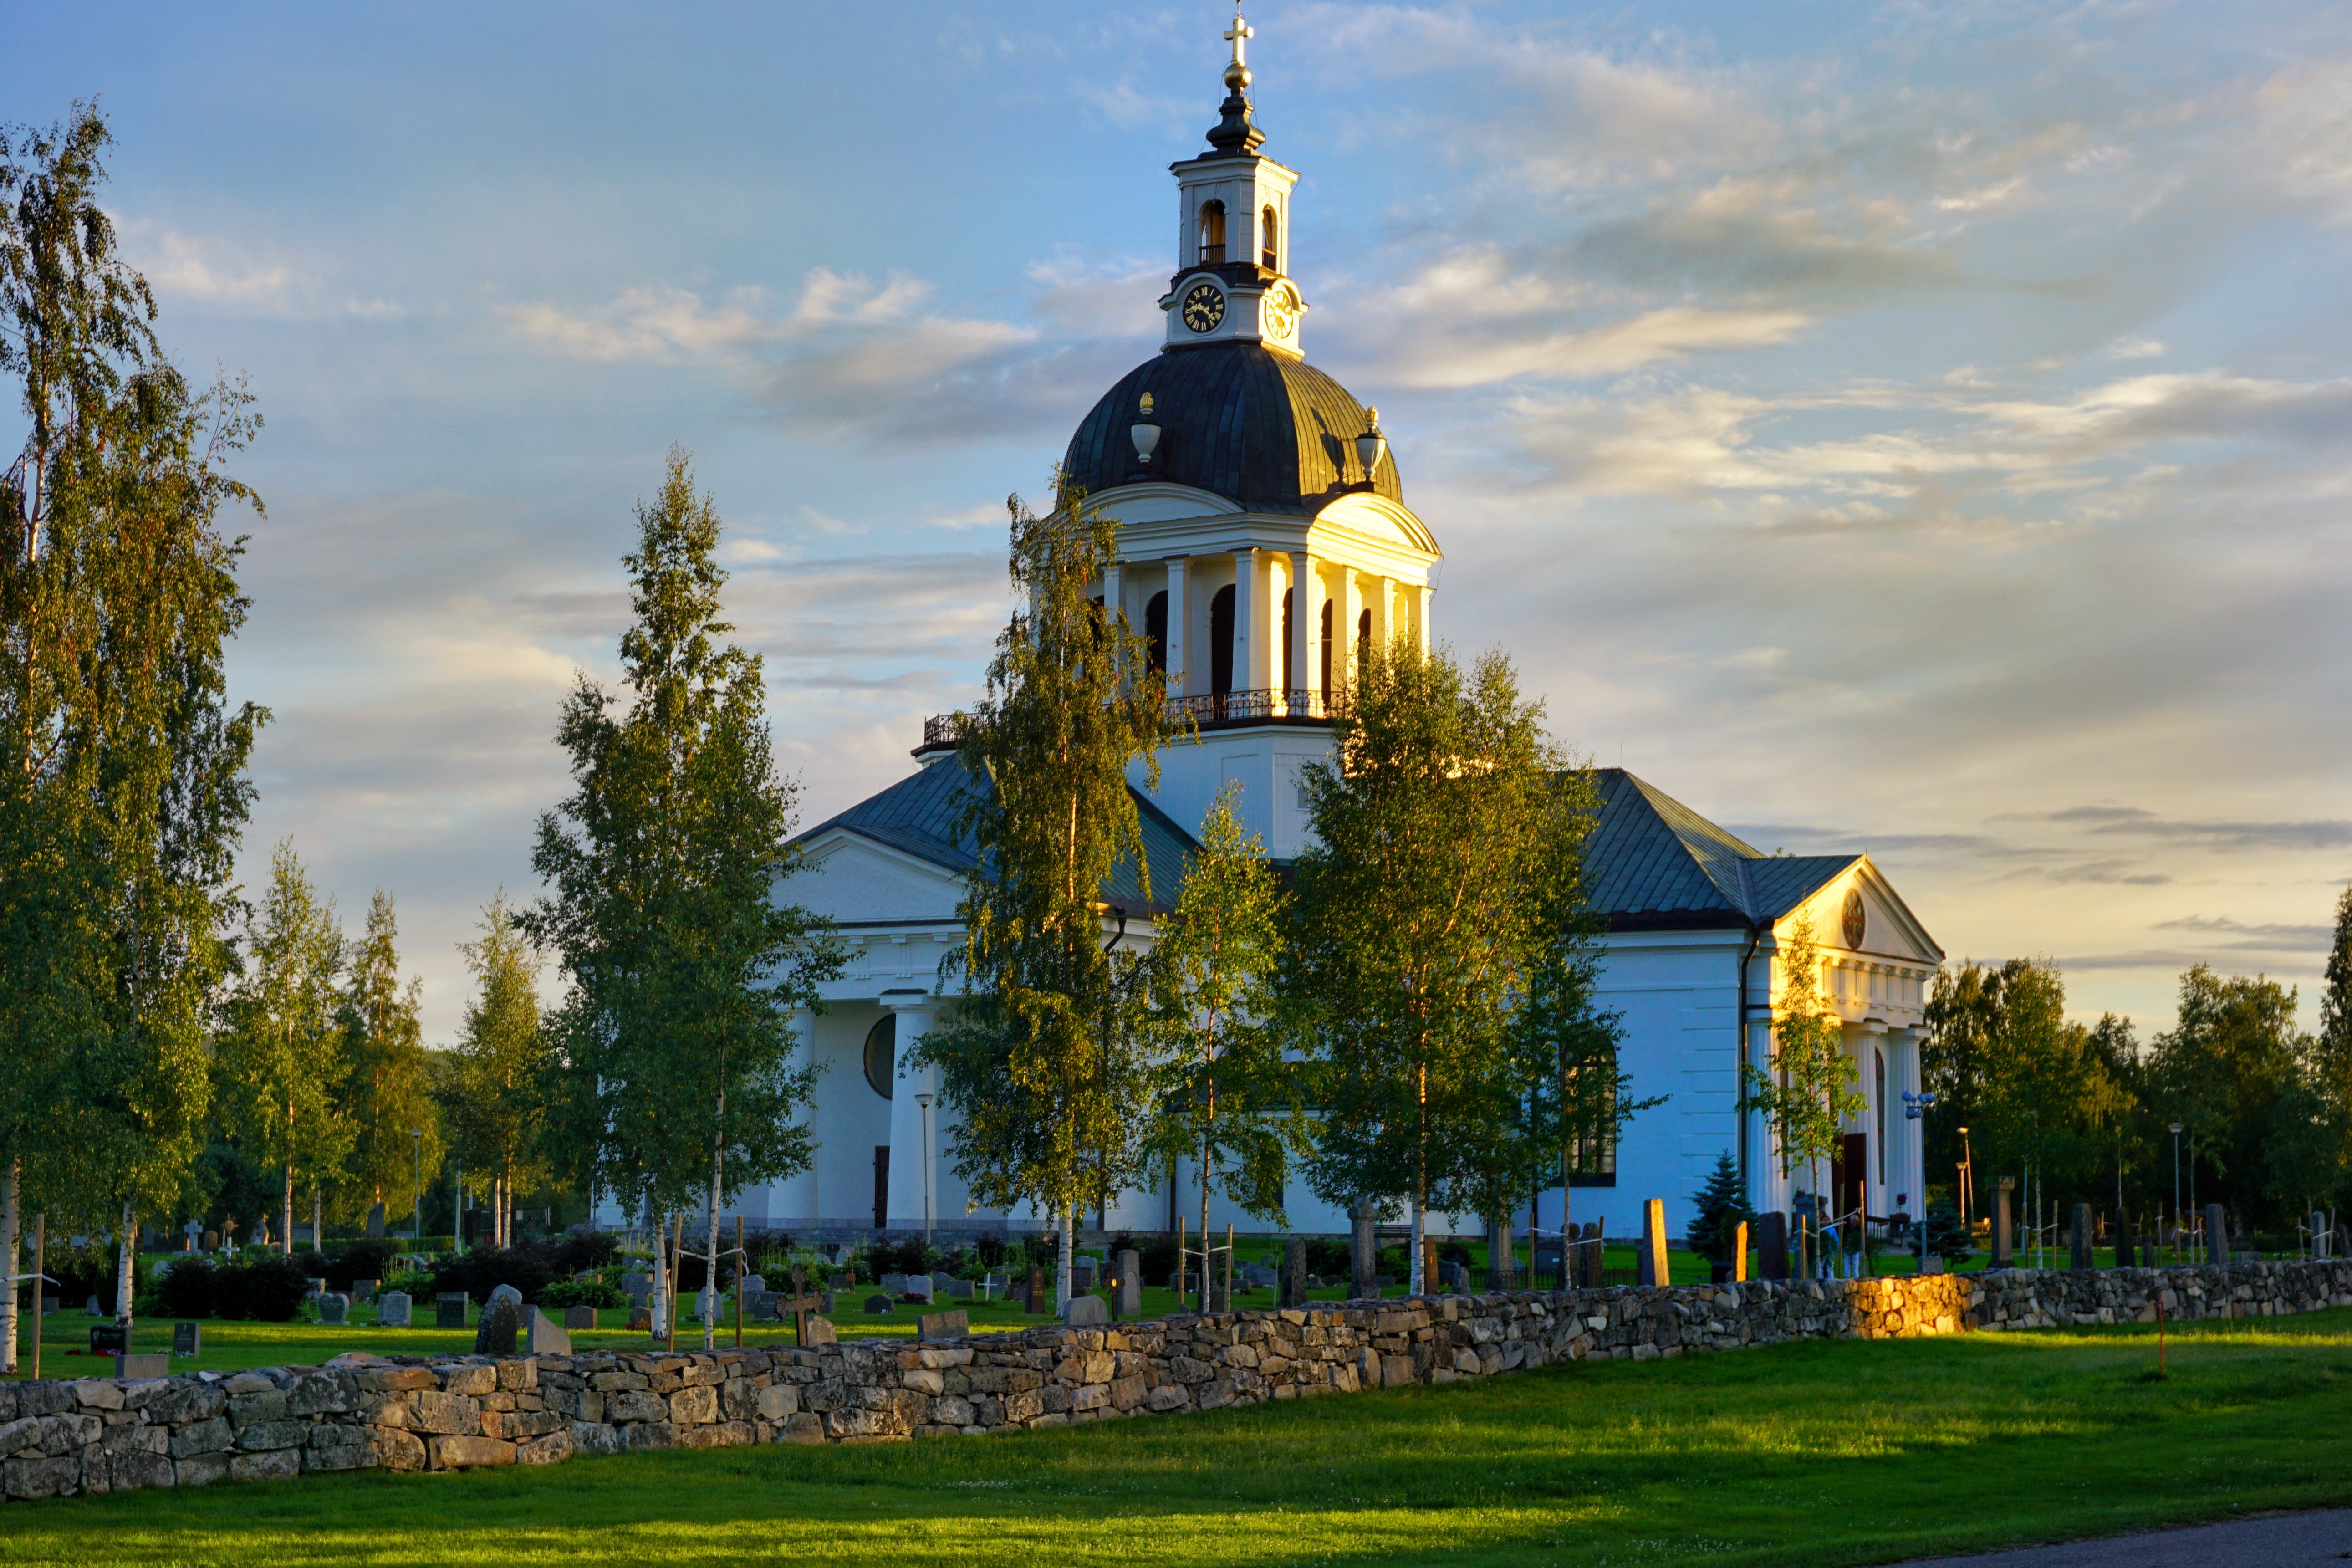 Skelleftea Swedish Lapland Country Church